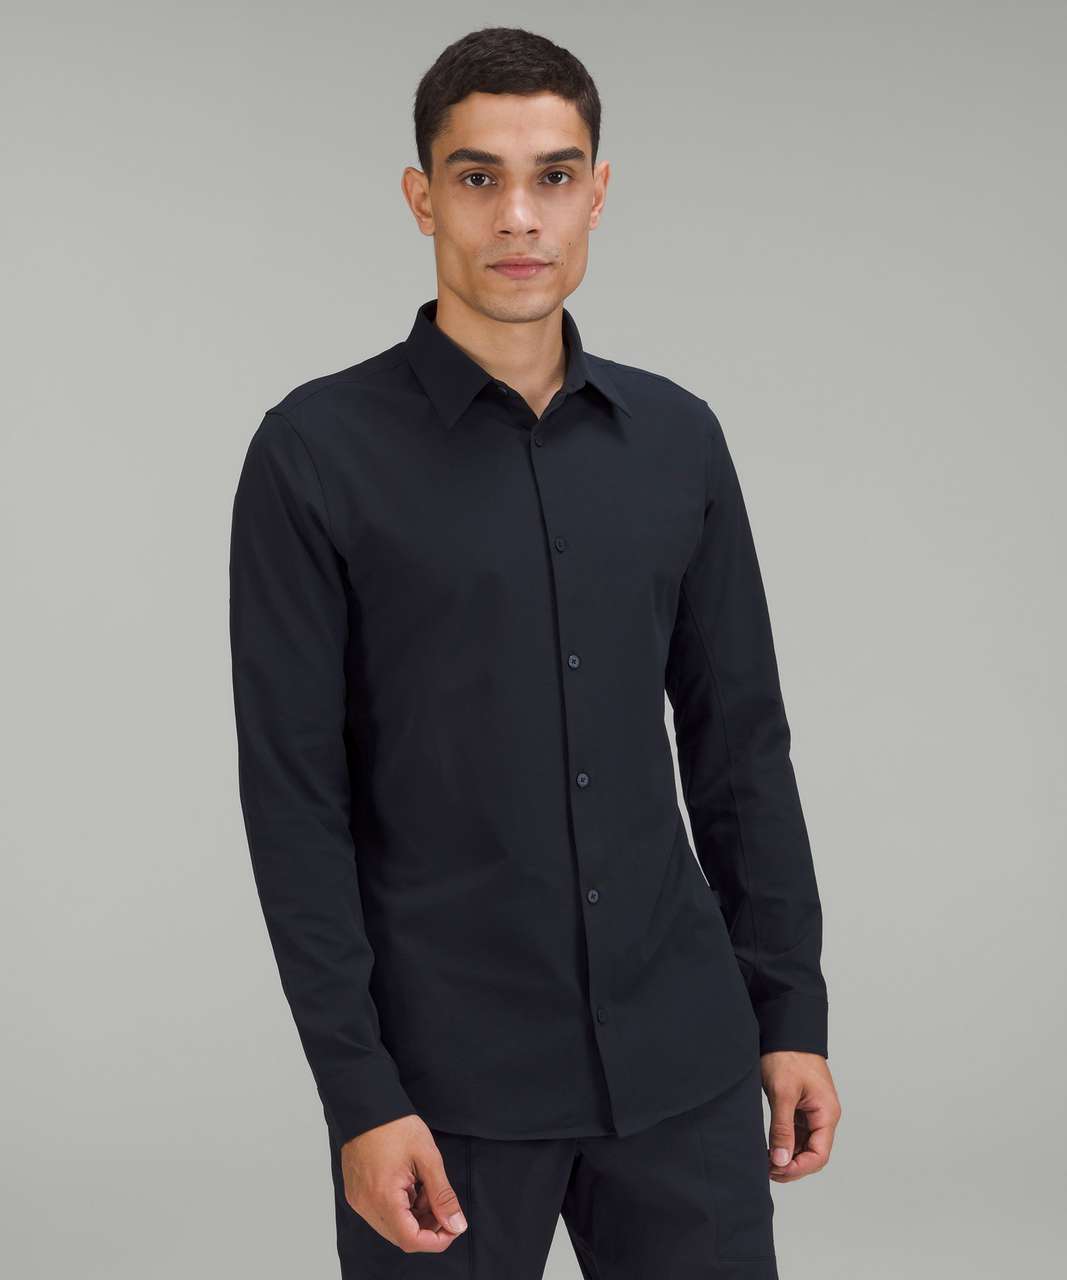 Lululemon New Venture Long Sleeve Shirt - Classic Navy - lulu fanatics